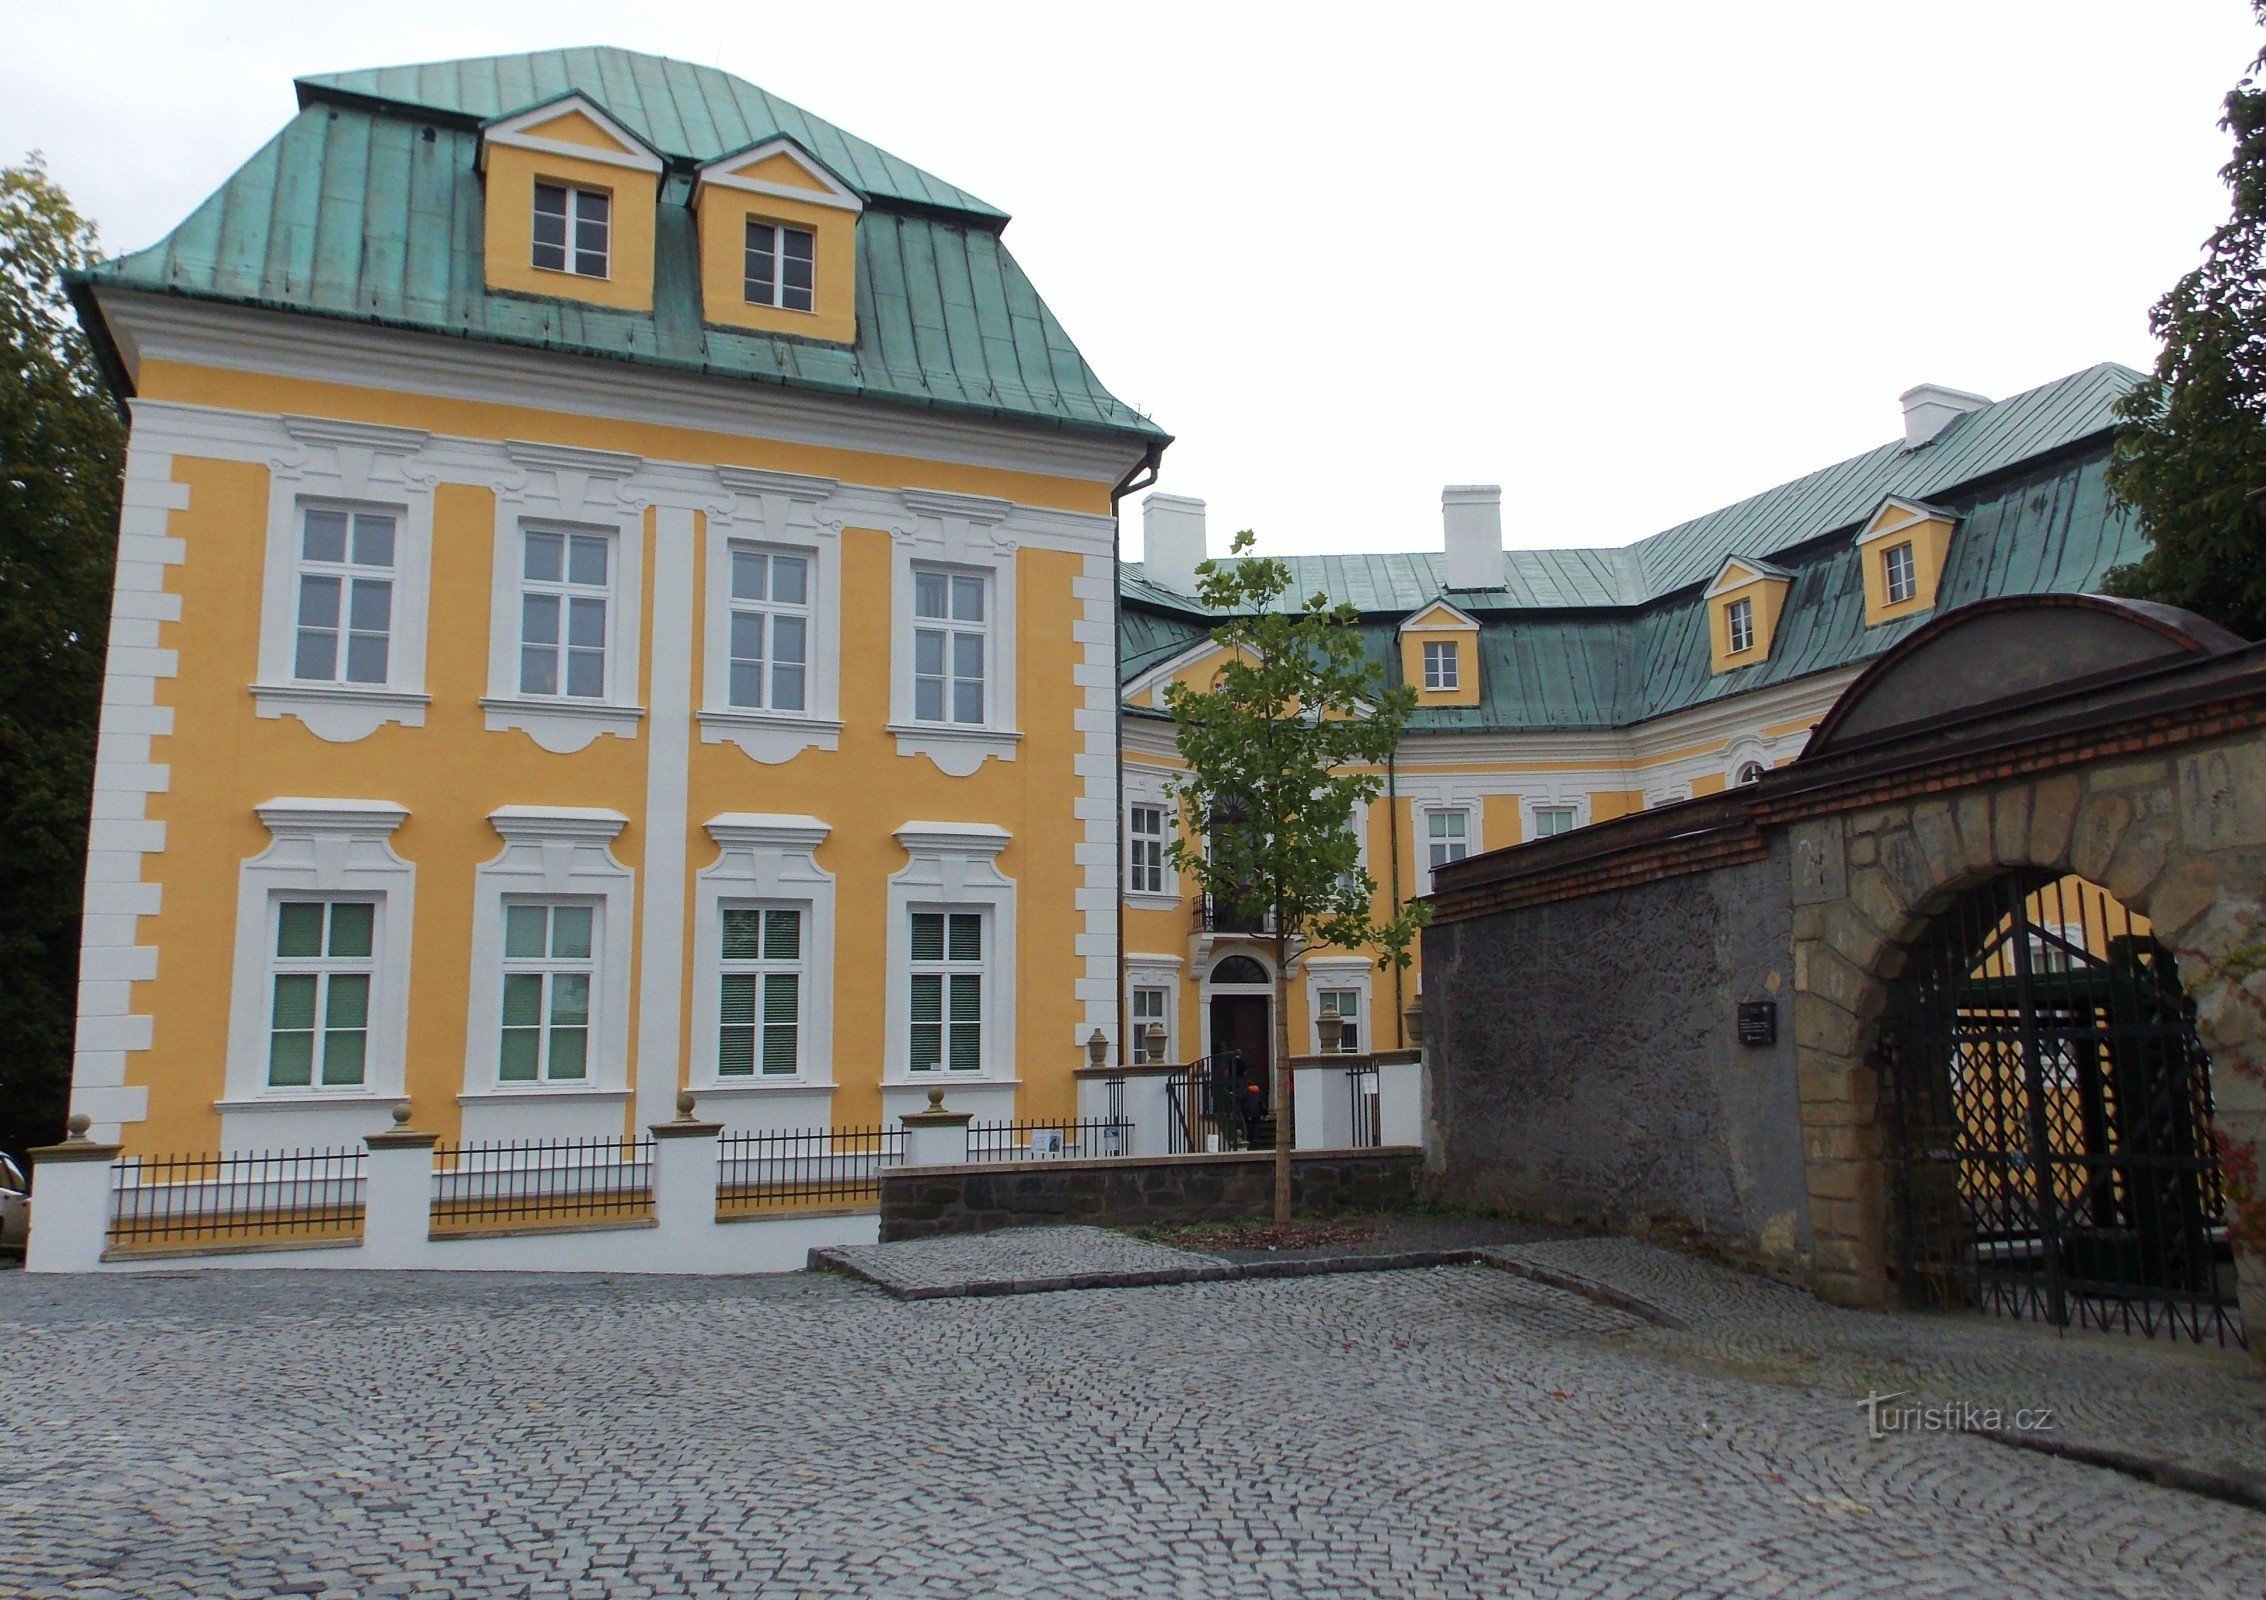 Het oude Bílovecký-kasteel